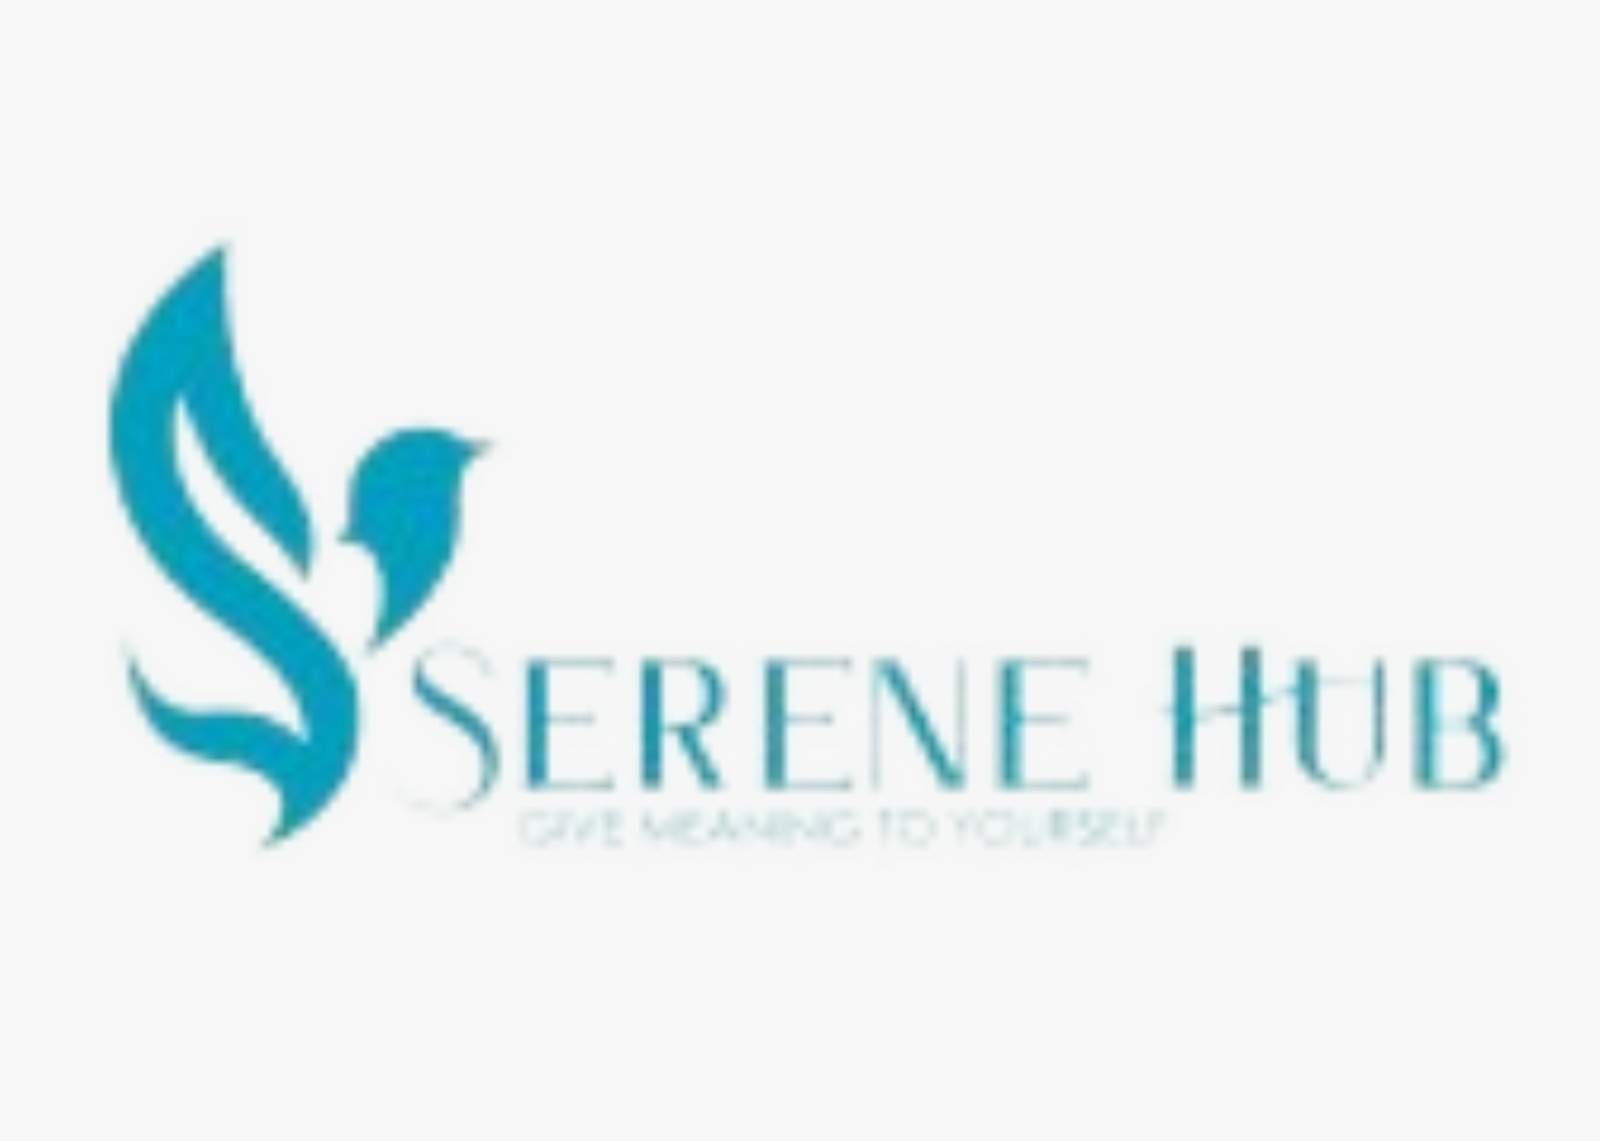 The-Serene-Hub-ClintS-Logos-Codestrela